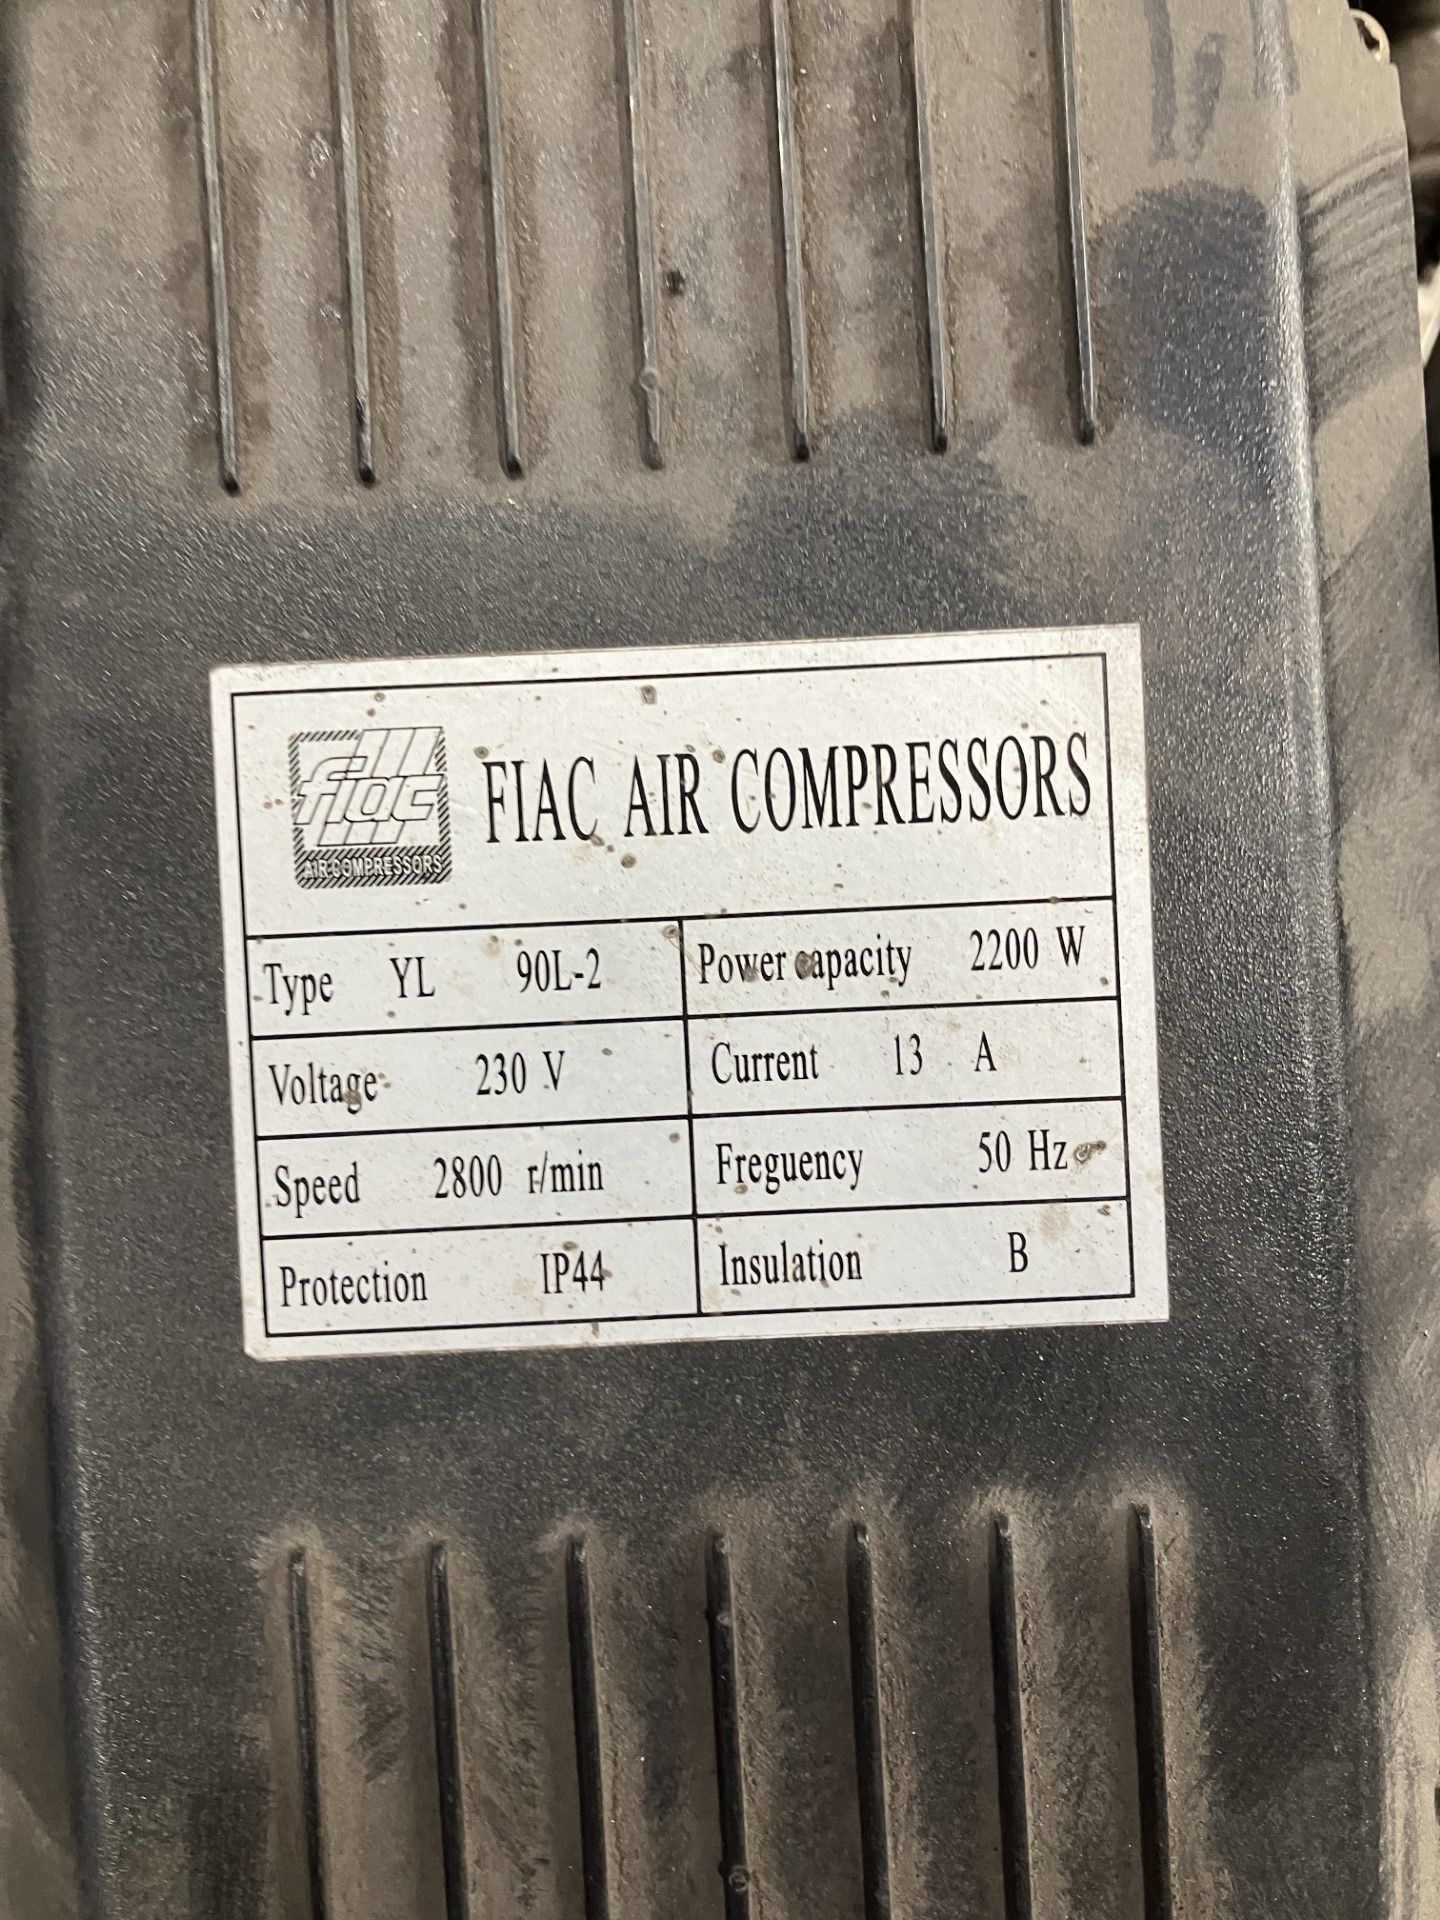 FIAC Air Compresor - Type YL 90L-2 - Image 3 of 3